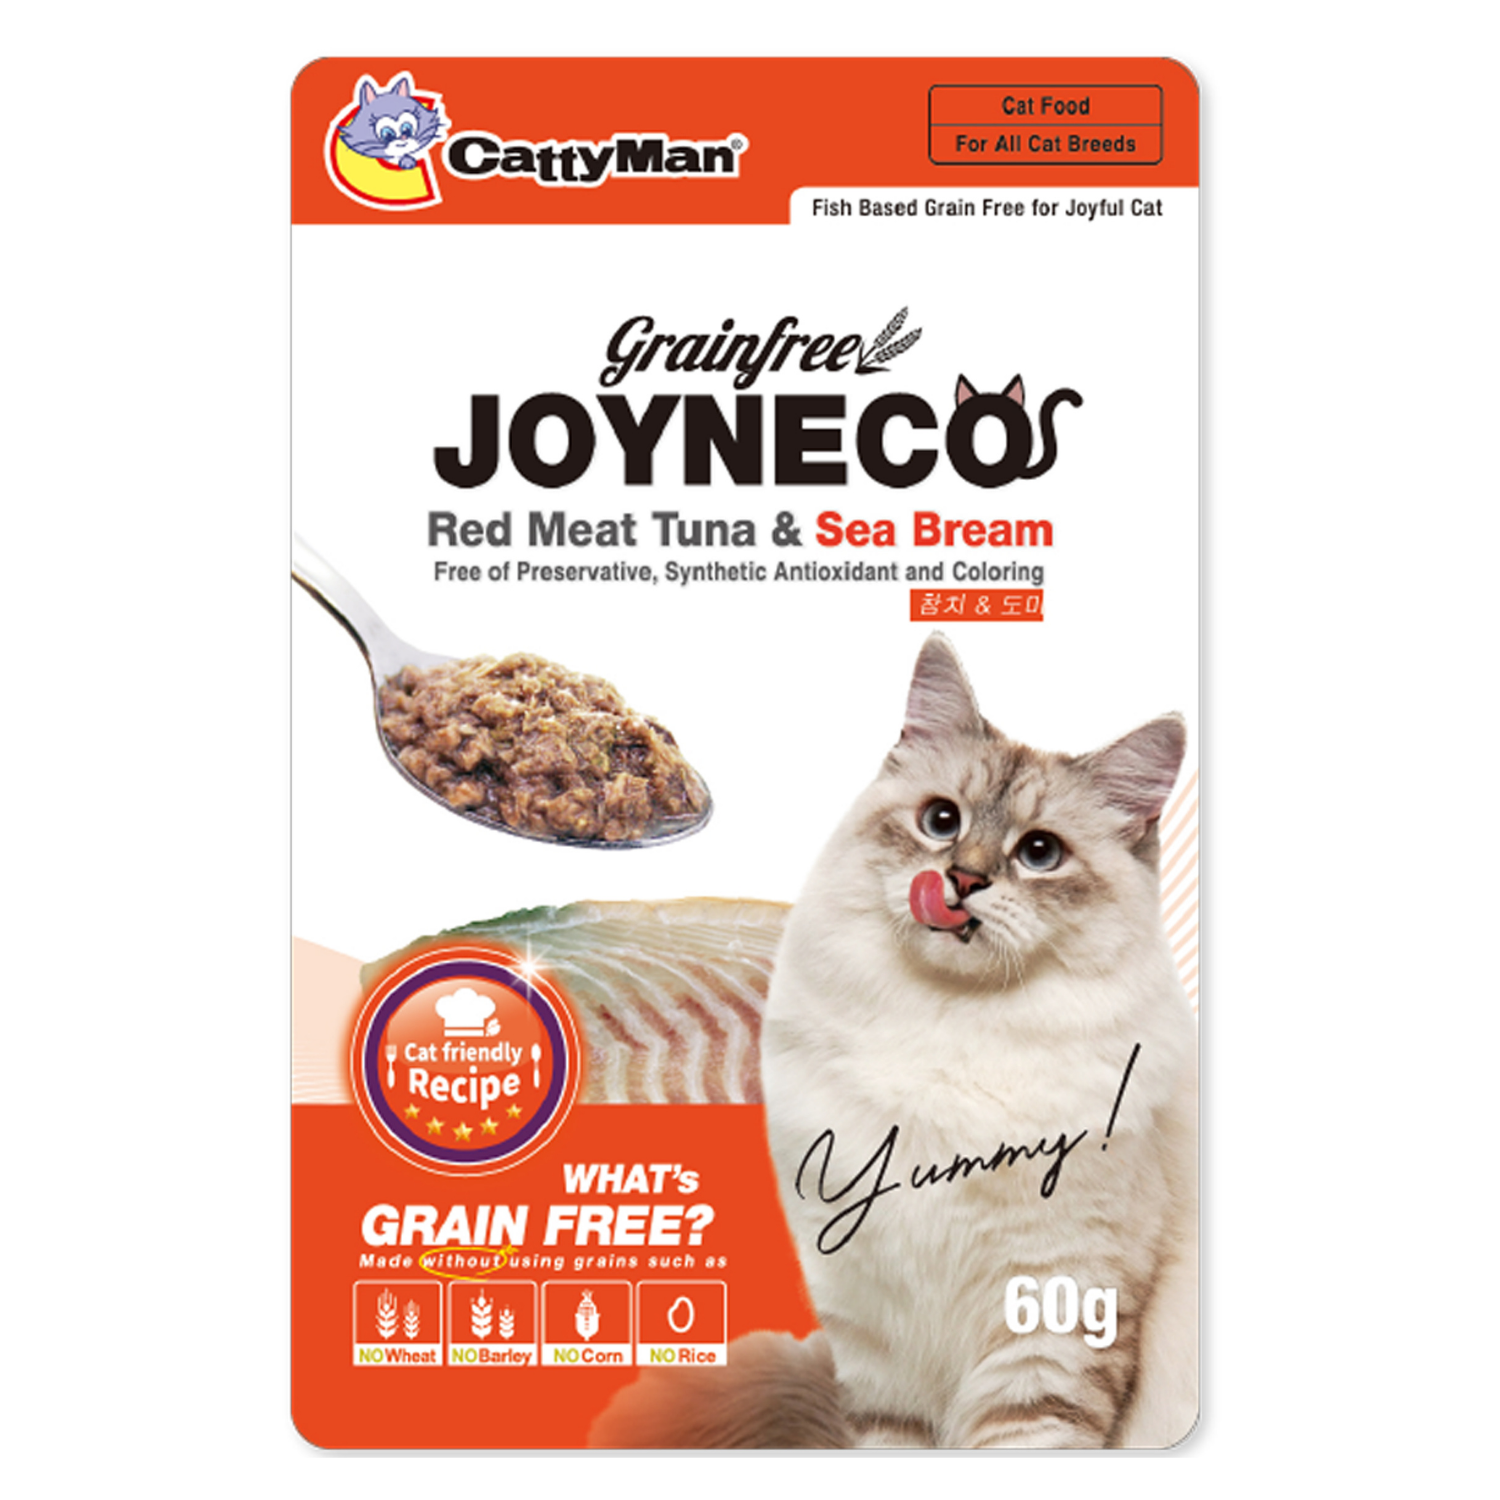 [DISCONTINUED] CattyMan Grain Free Joyneco (Red Meat Tuna & Sea Bream) Pouch - 60g